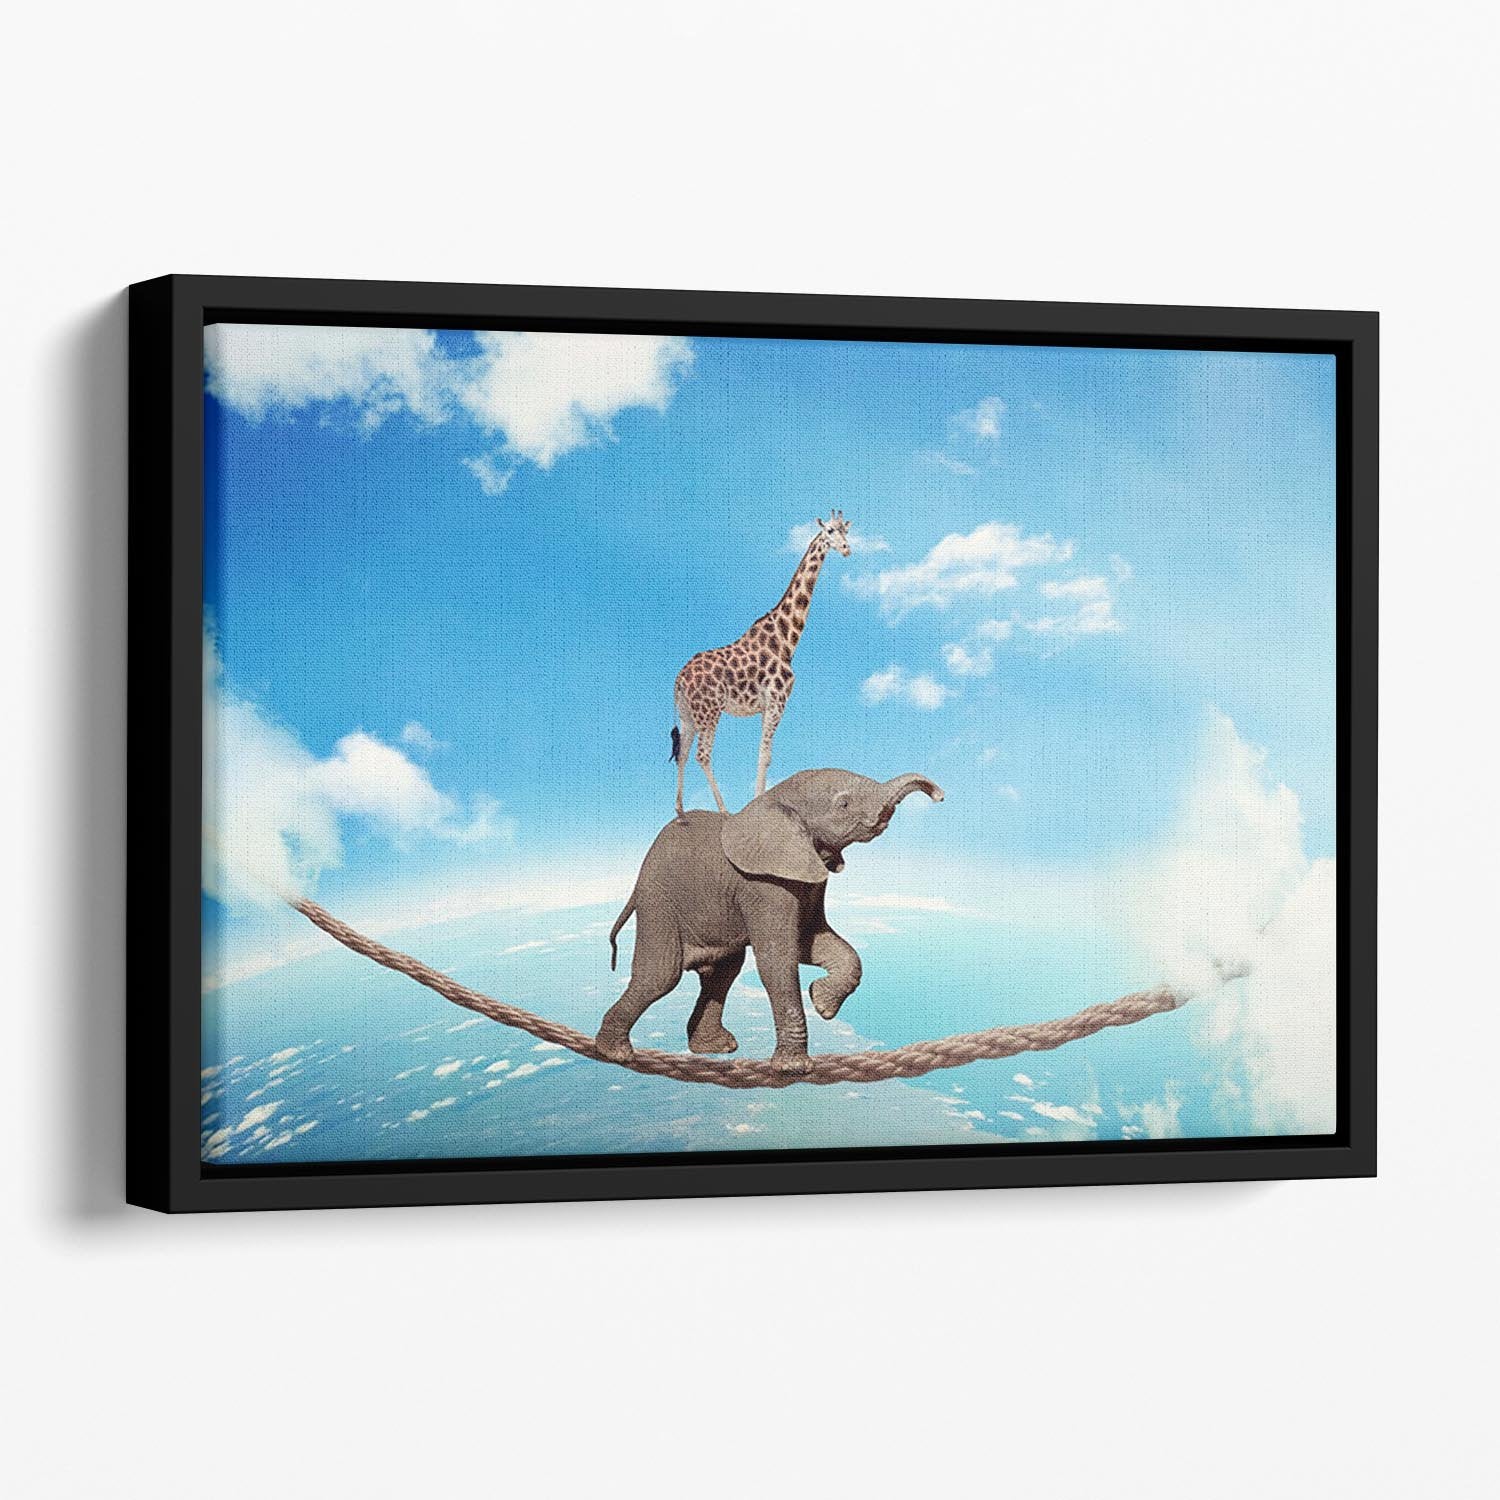 Elephant with giraffe walking on dangerous rope high in sky Floating Framed Canvas - Canvas Art Rocks - 1